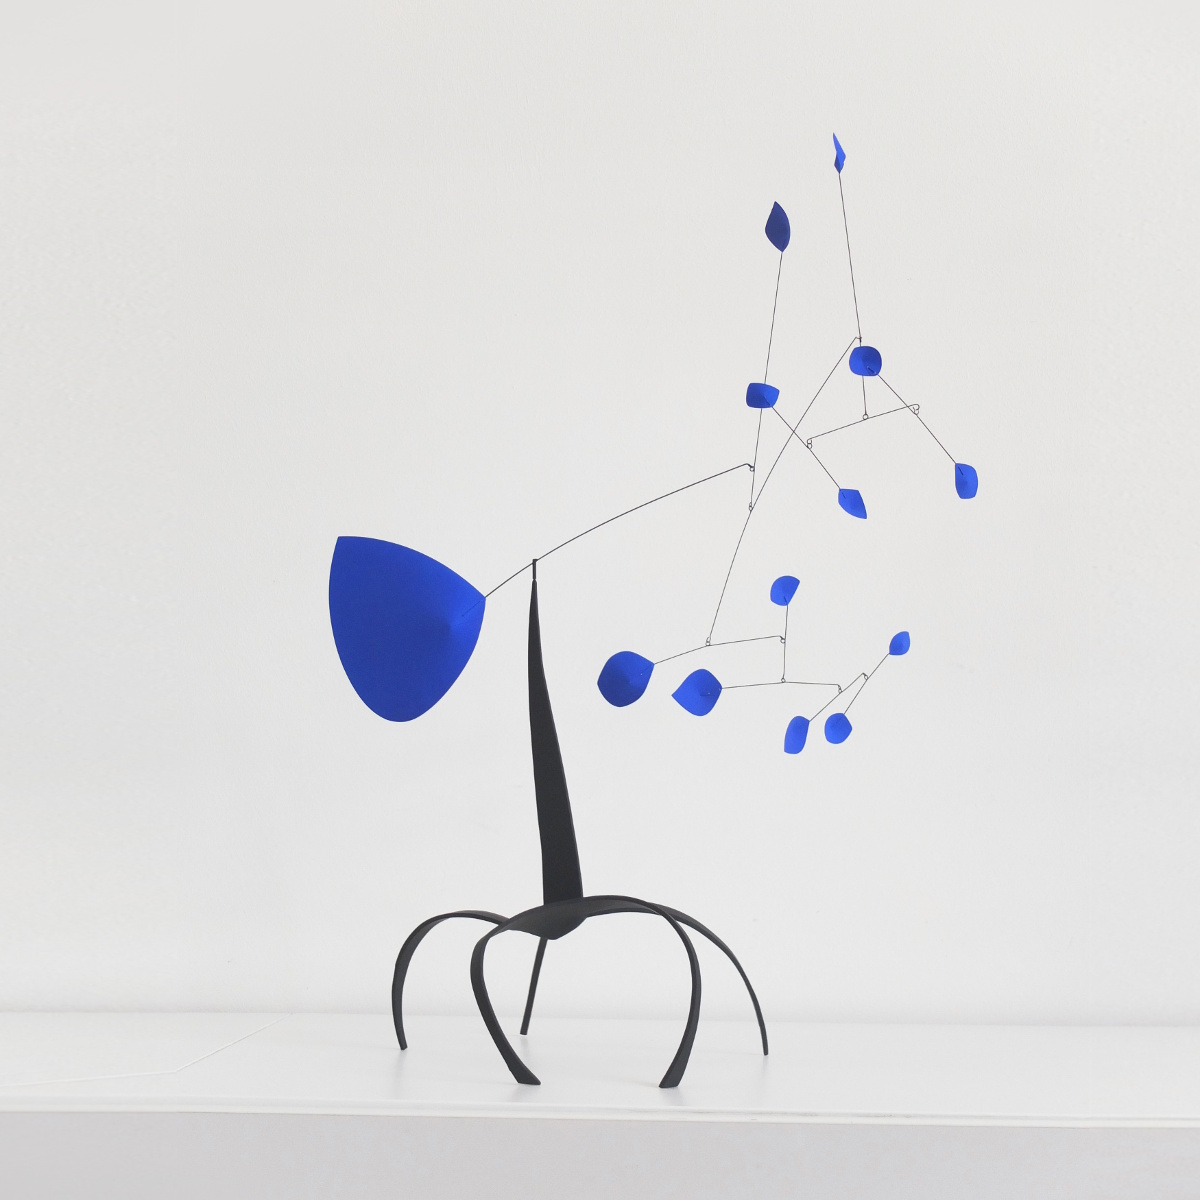 Alex Palenski stabile Cerisier bleu sculpture mobile à poser